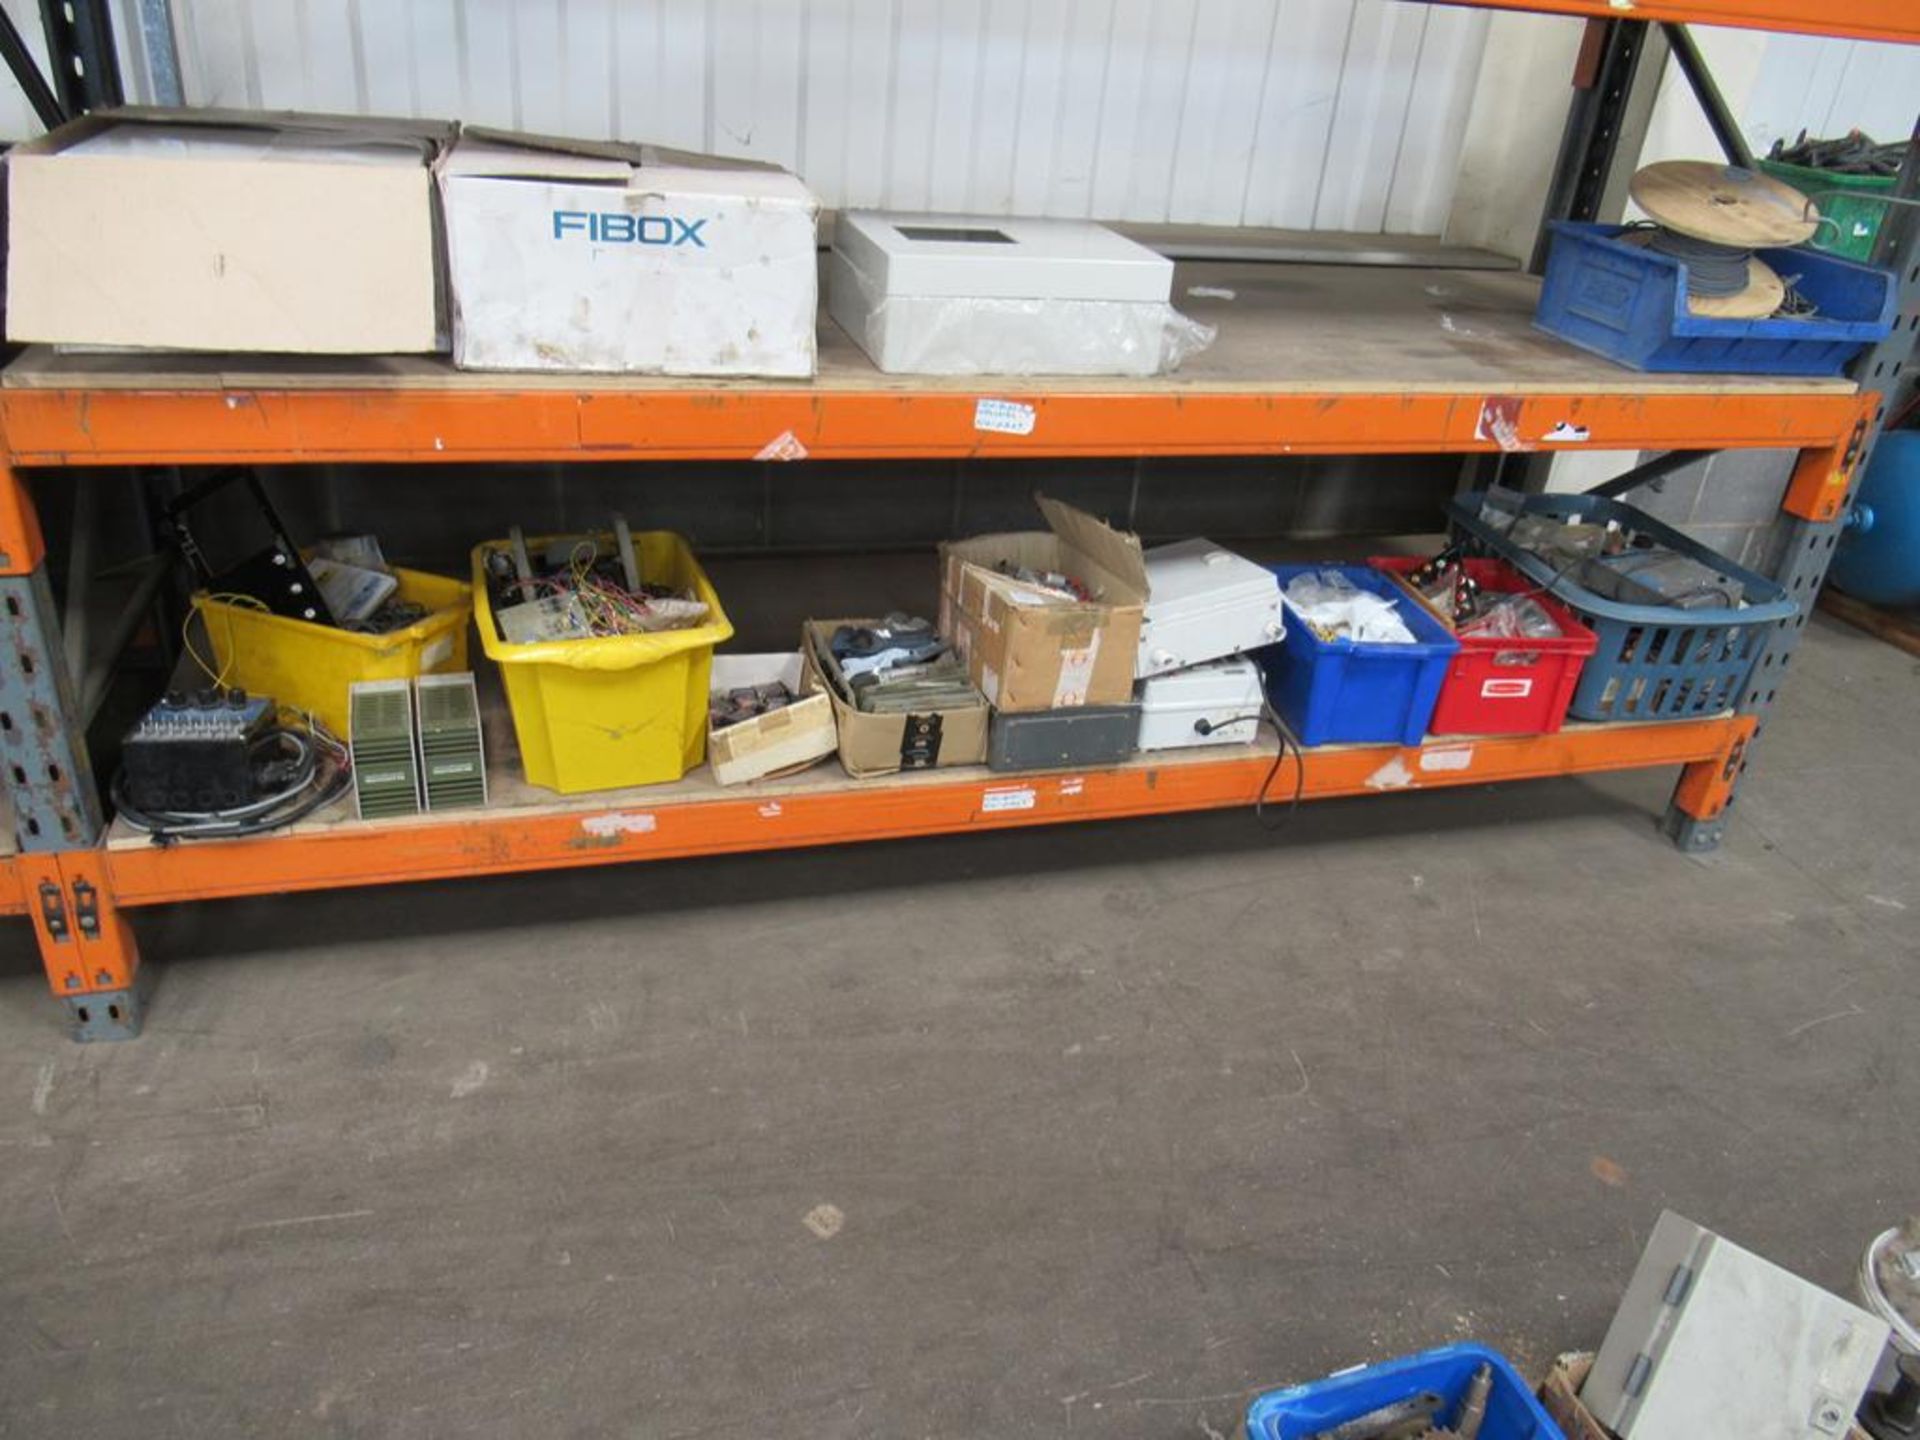 Shelf of various electrical equipment